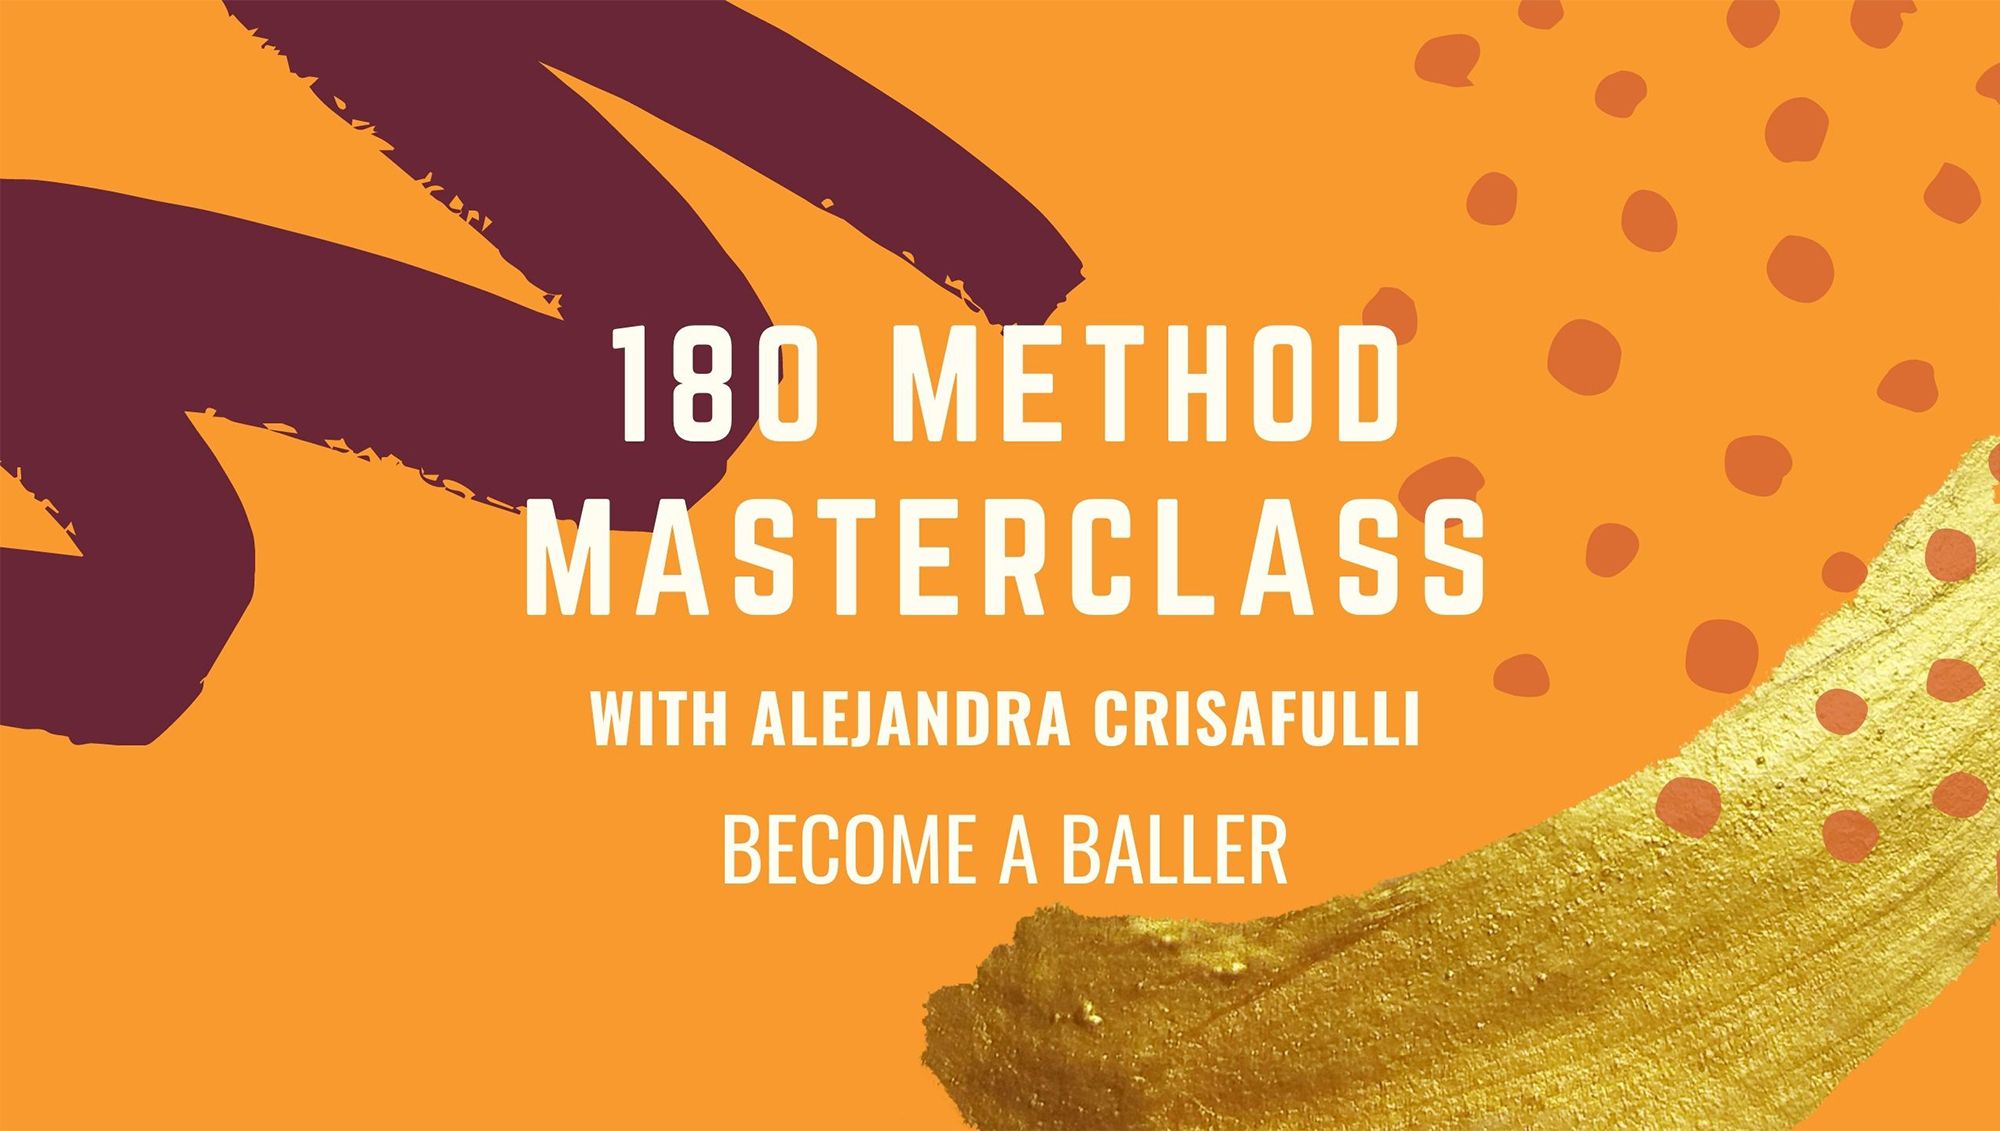 The 180 Method Masterclass